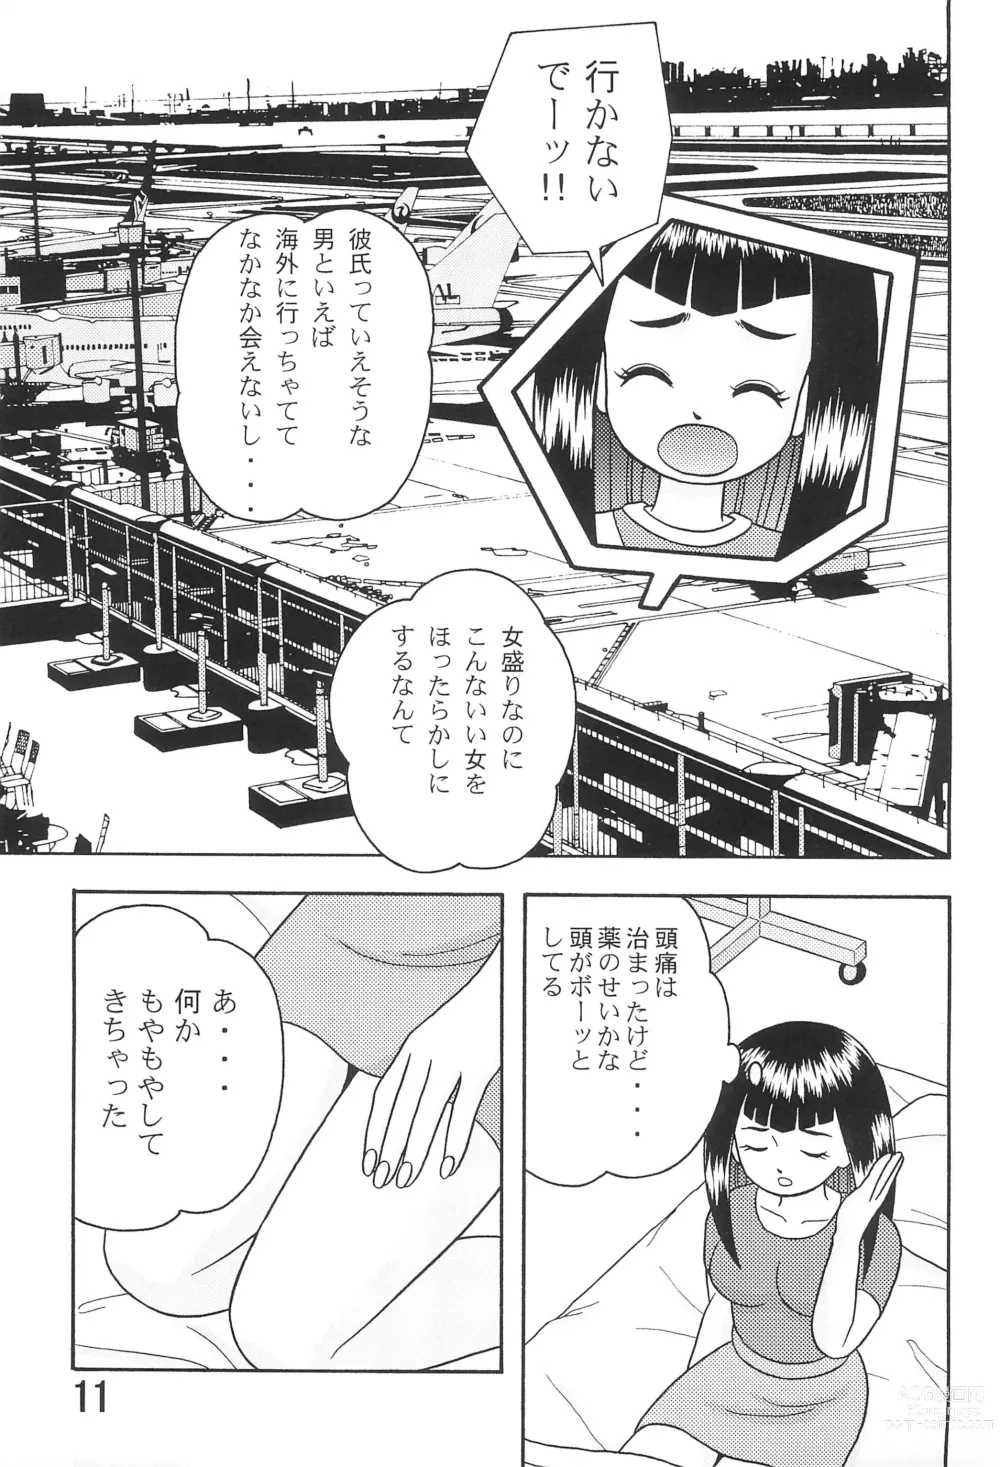 Page 13 of doujinshi 5 Nen 1 Kumi Mahougumi 2